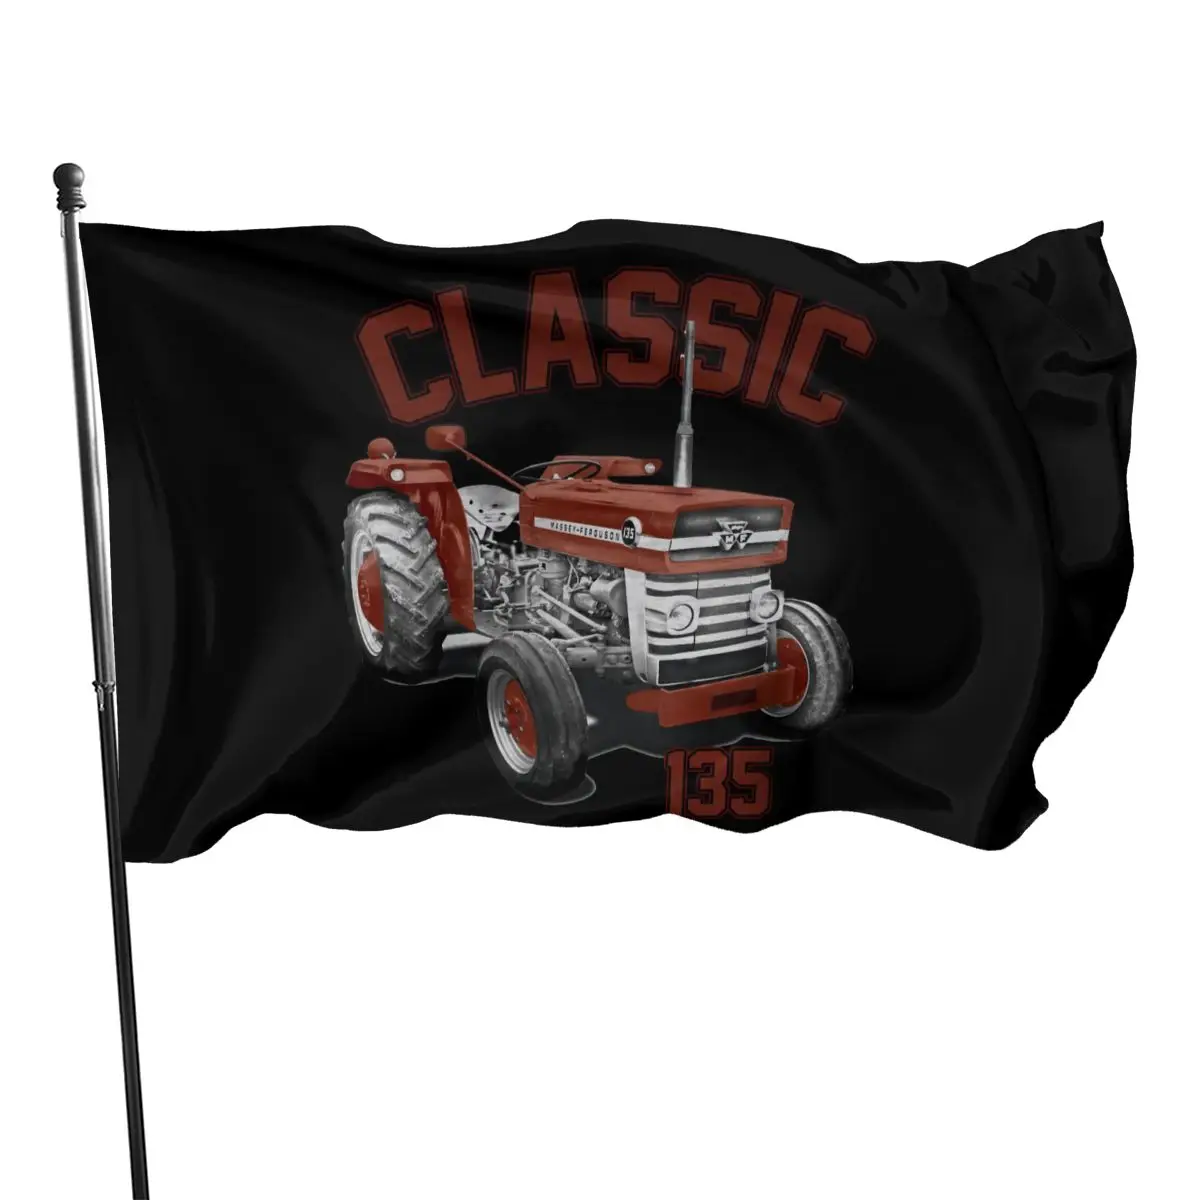 

Classic Tractors Massey Ferguson 135 Classic Tractor Inspired Summer Retro Slogan Funny More Colors Flag flags 3x5